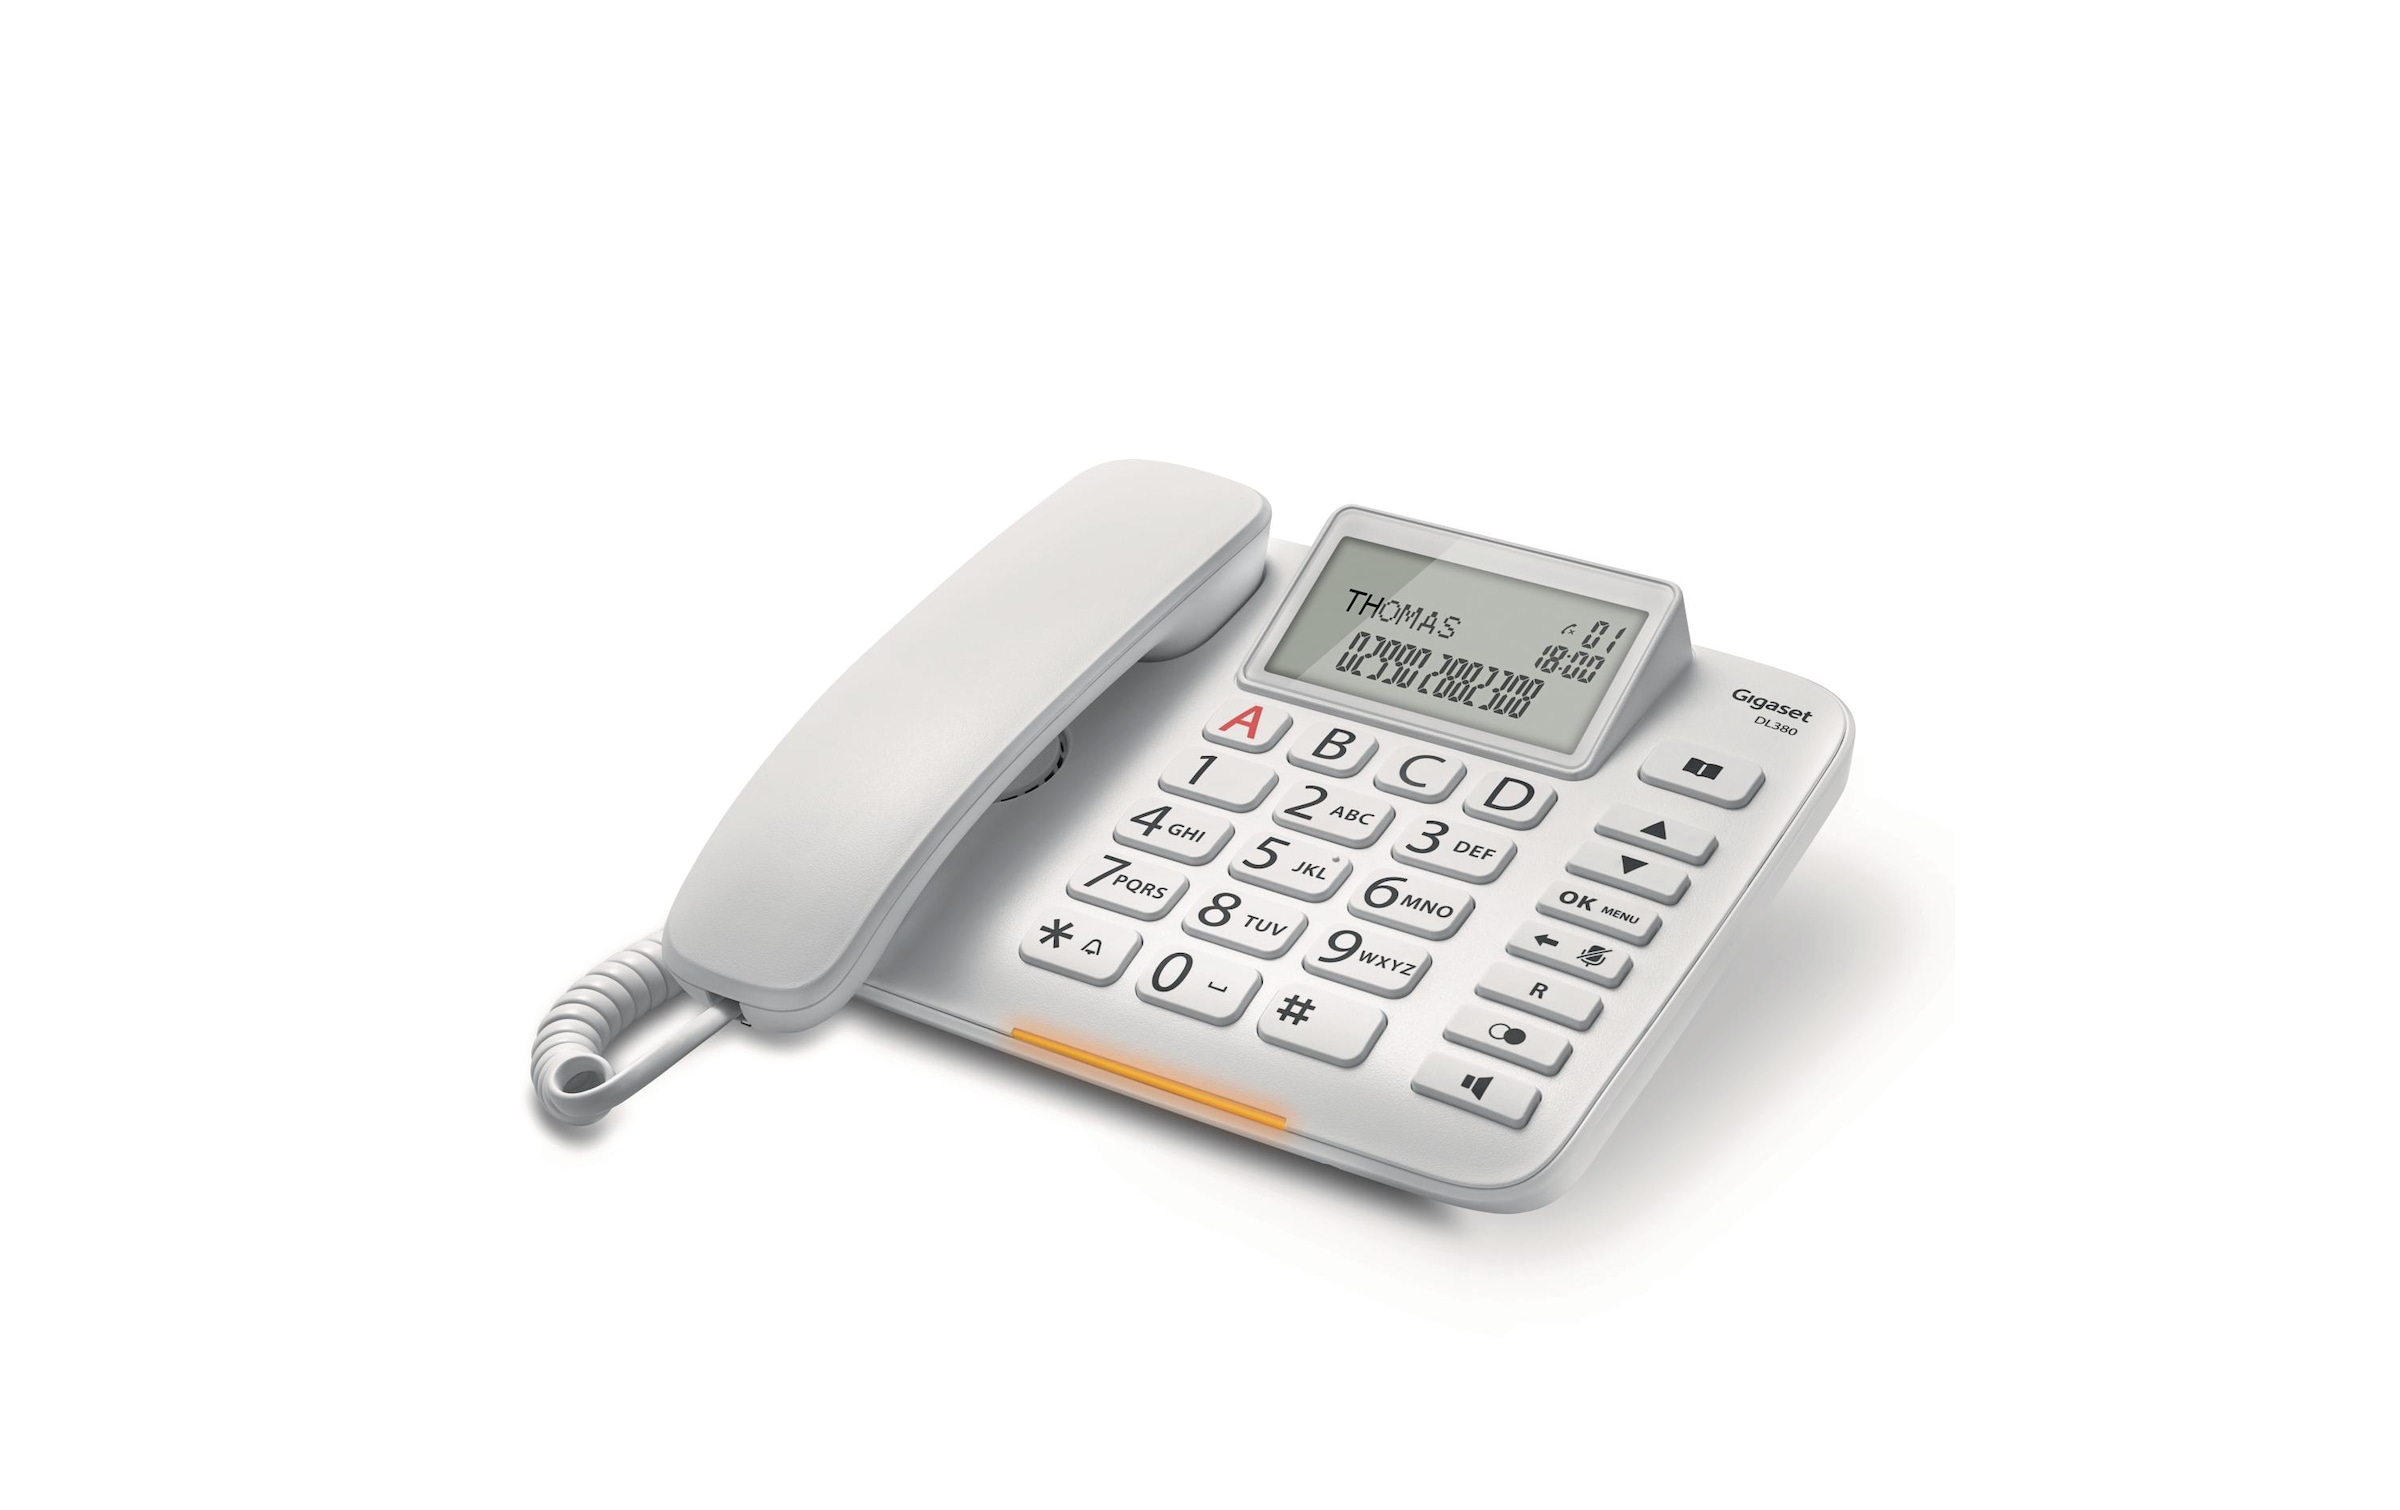 Kabelgebundenes Telefon »DL380 weiss«